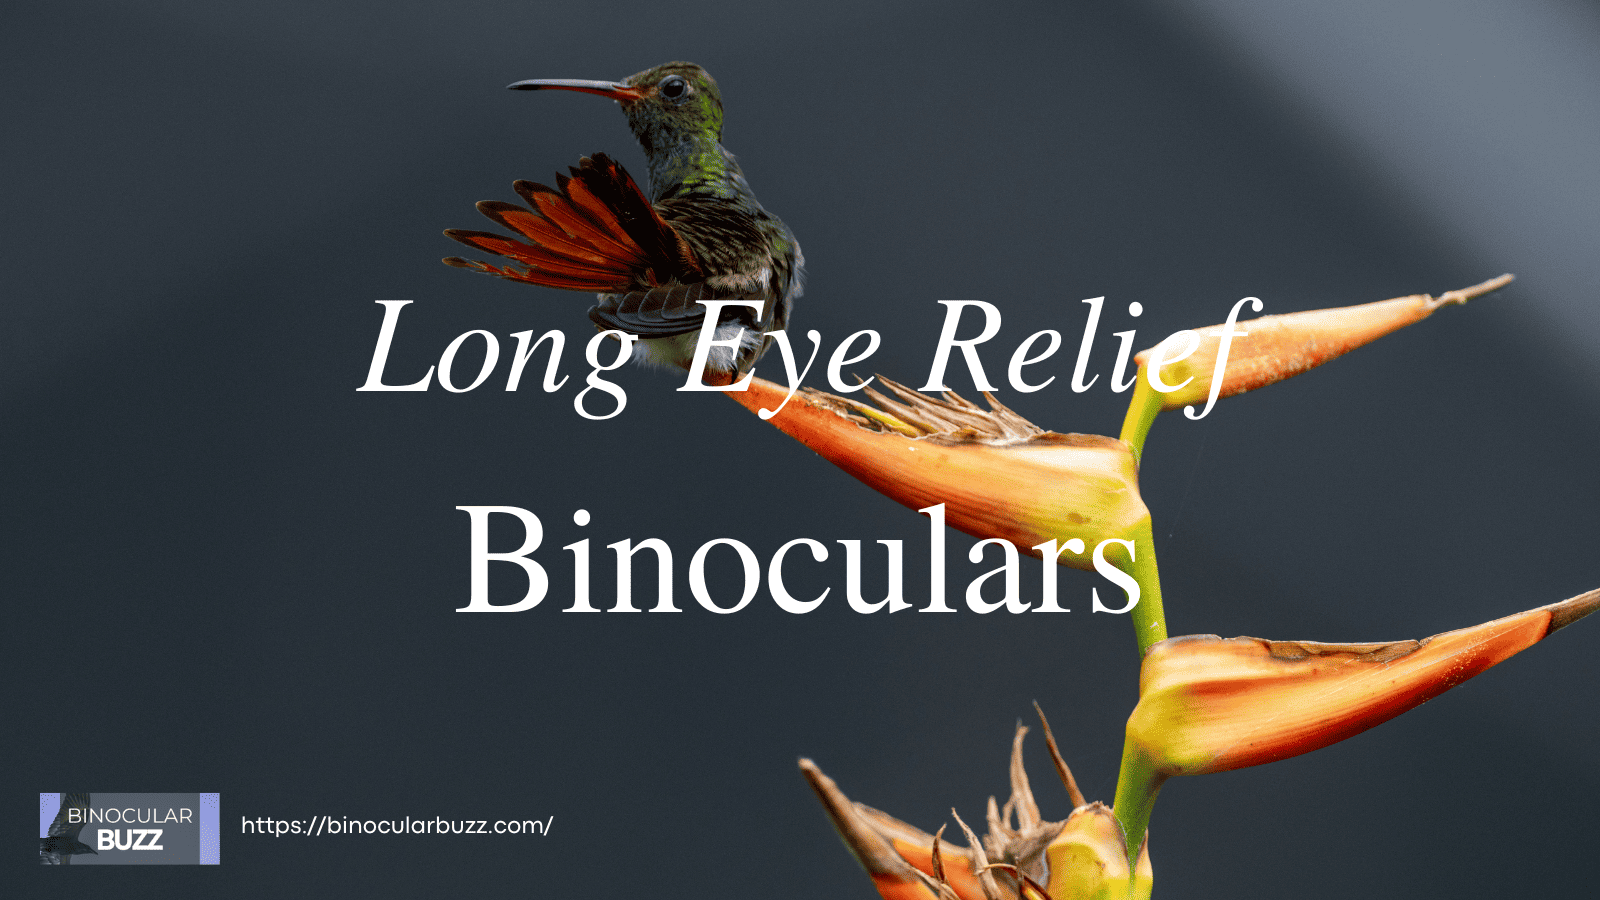 Long Eye Relief Binoculars